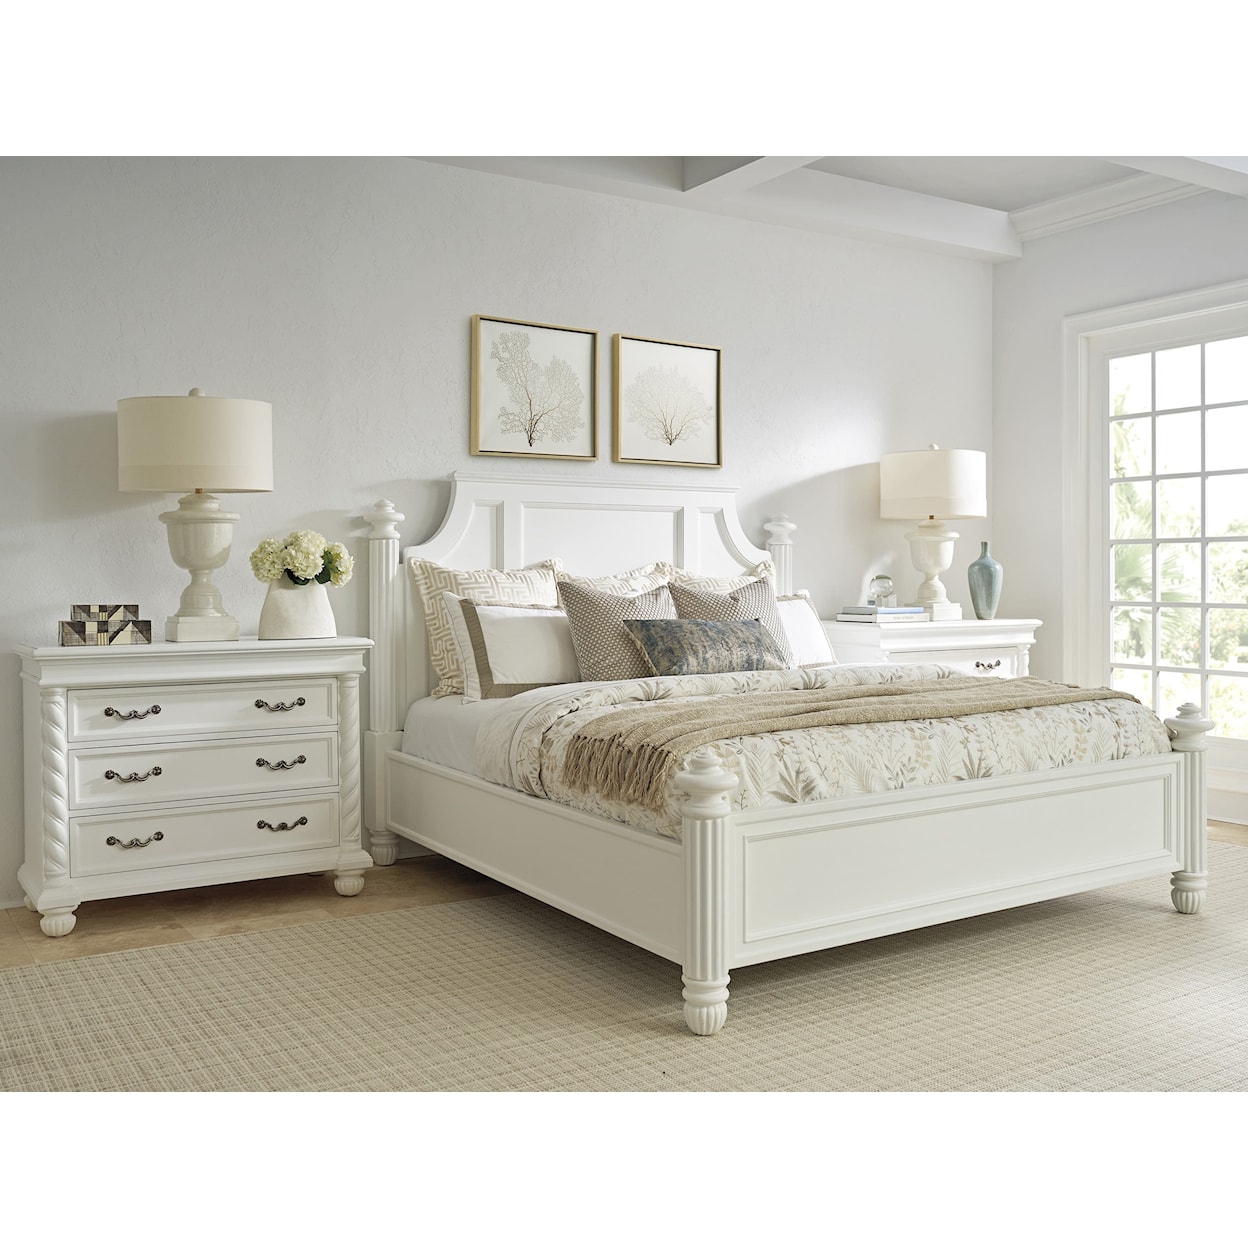 Barclay Butera Villa Blanca Queen Bedroom Set